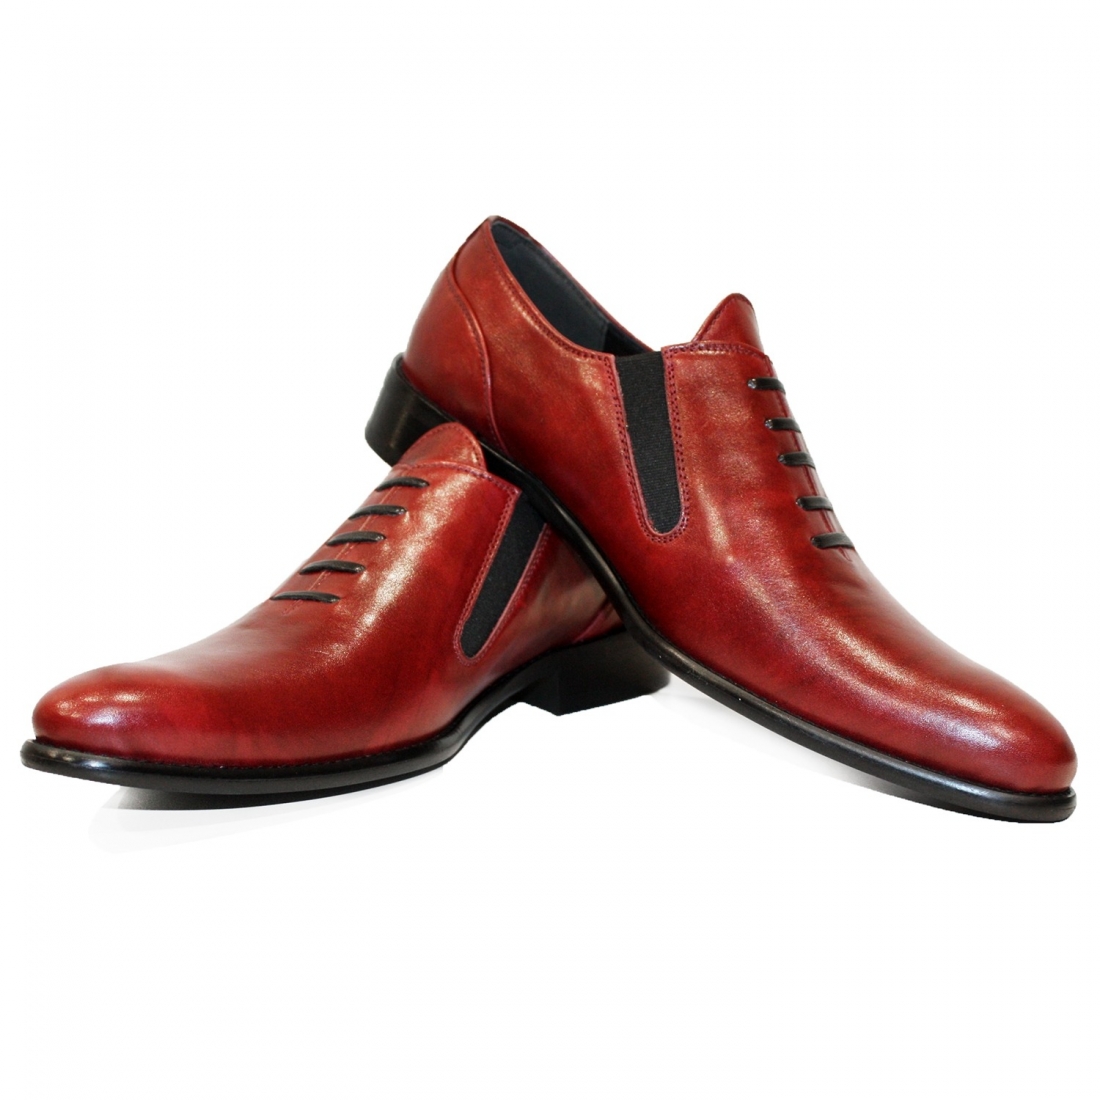 Modello Rabetto - Buty Wsuwane - Handmade Colorful Italian Leather Shoes